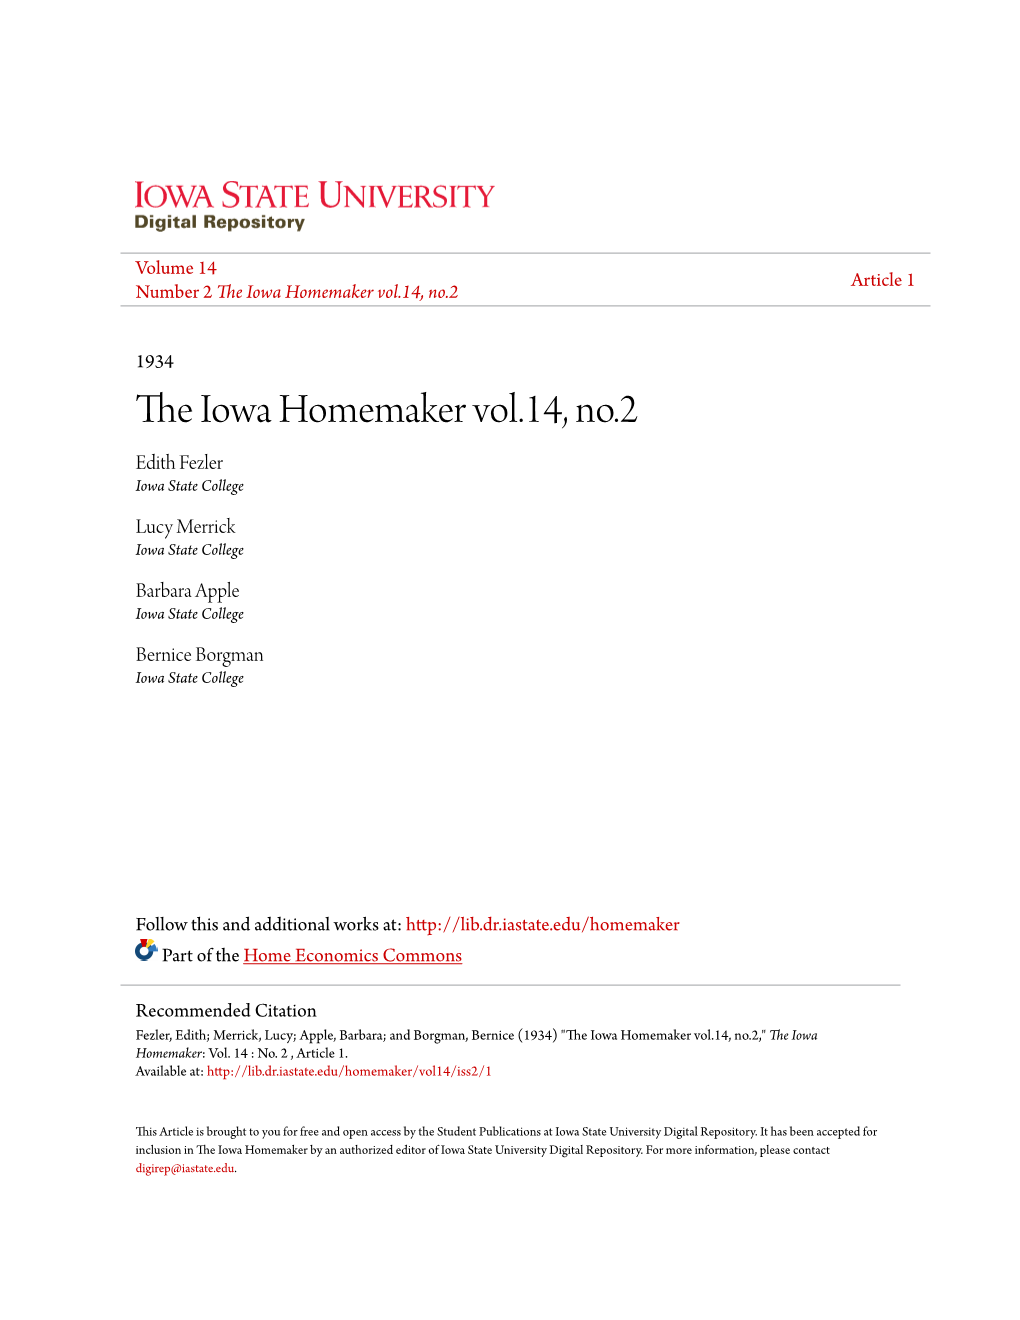 The Iowa Homemaker Vol.14, No.2